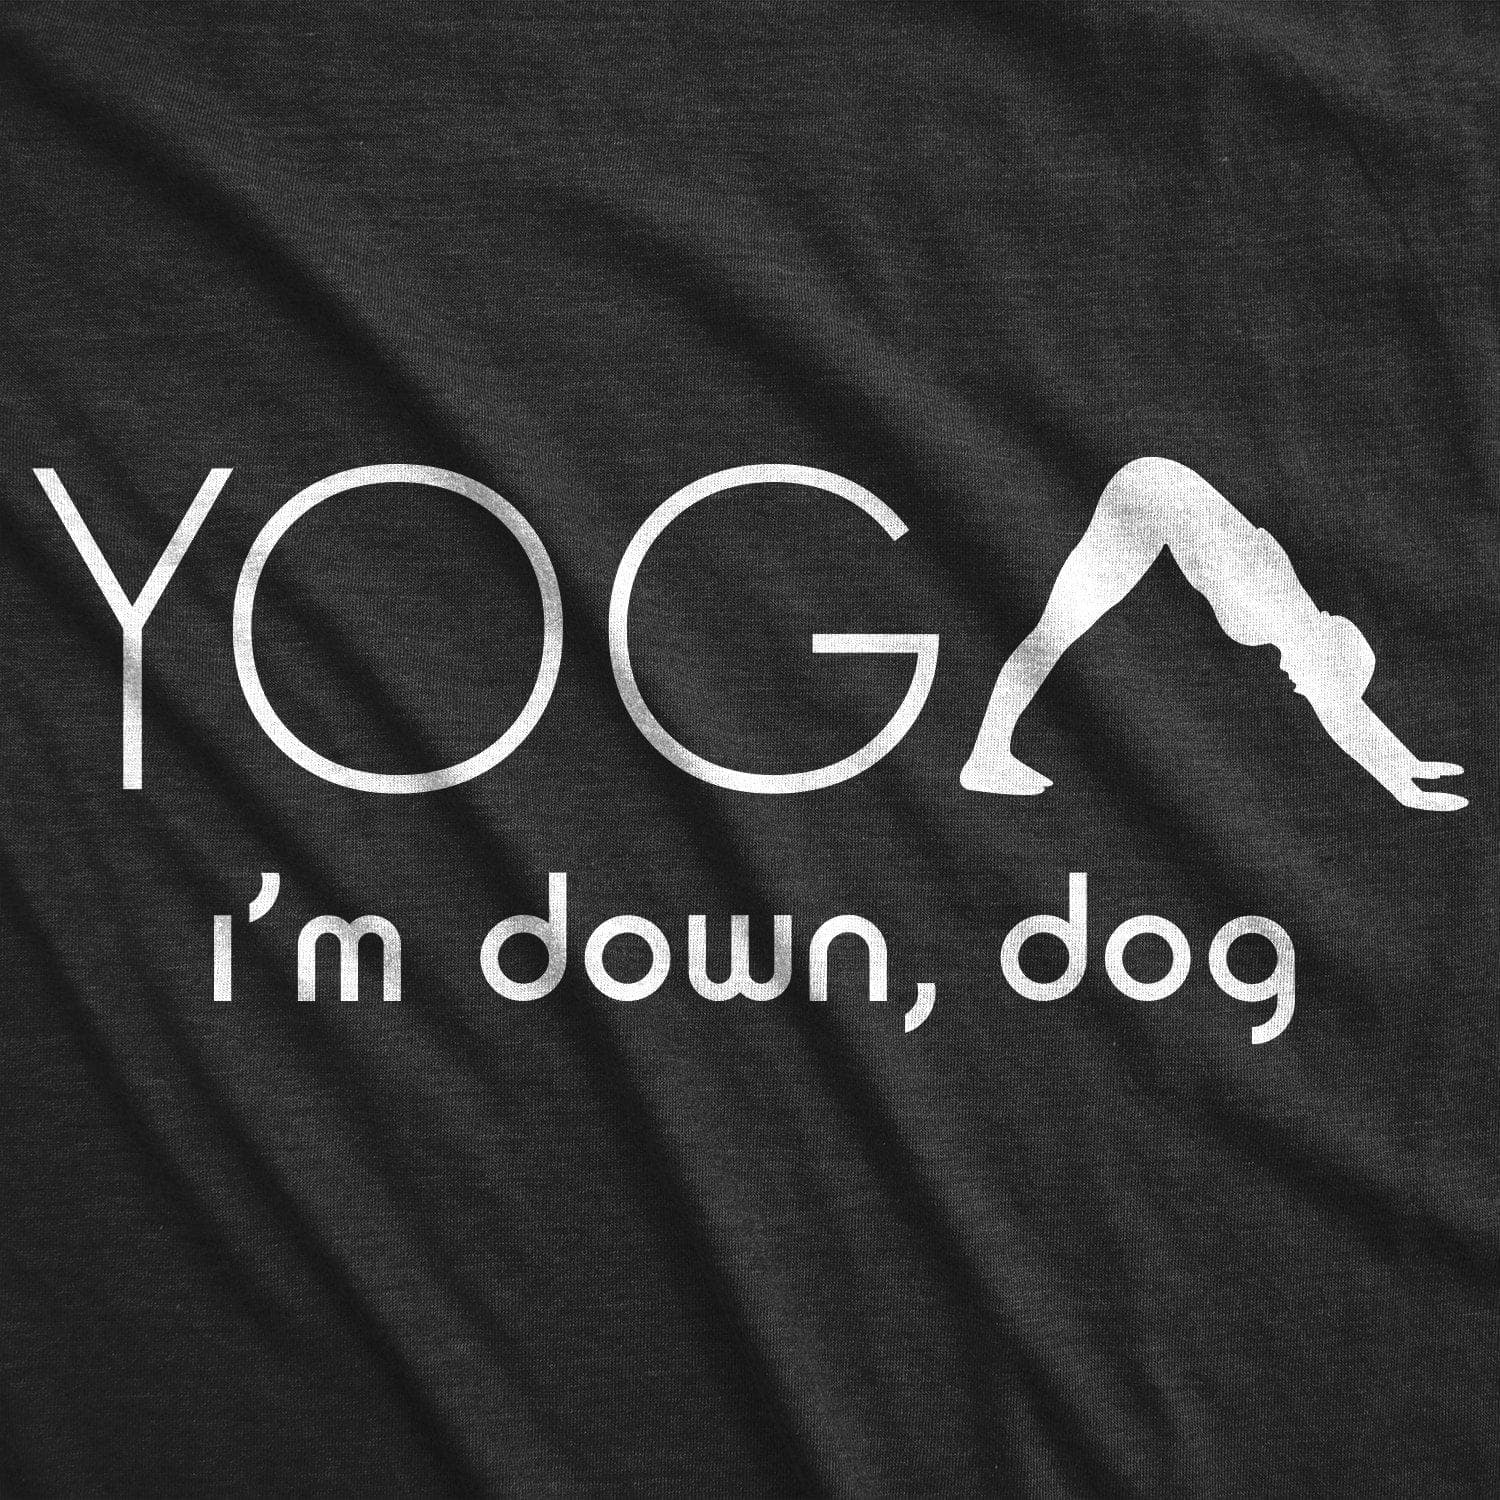 Yoga, I'm Down Dog Women's Tshirt  -  Crazy Dog T-Shirts